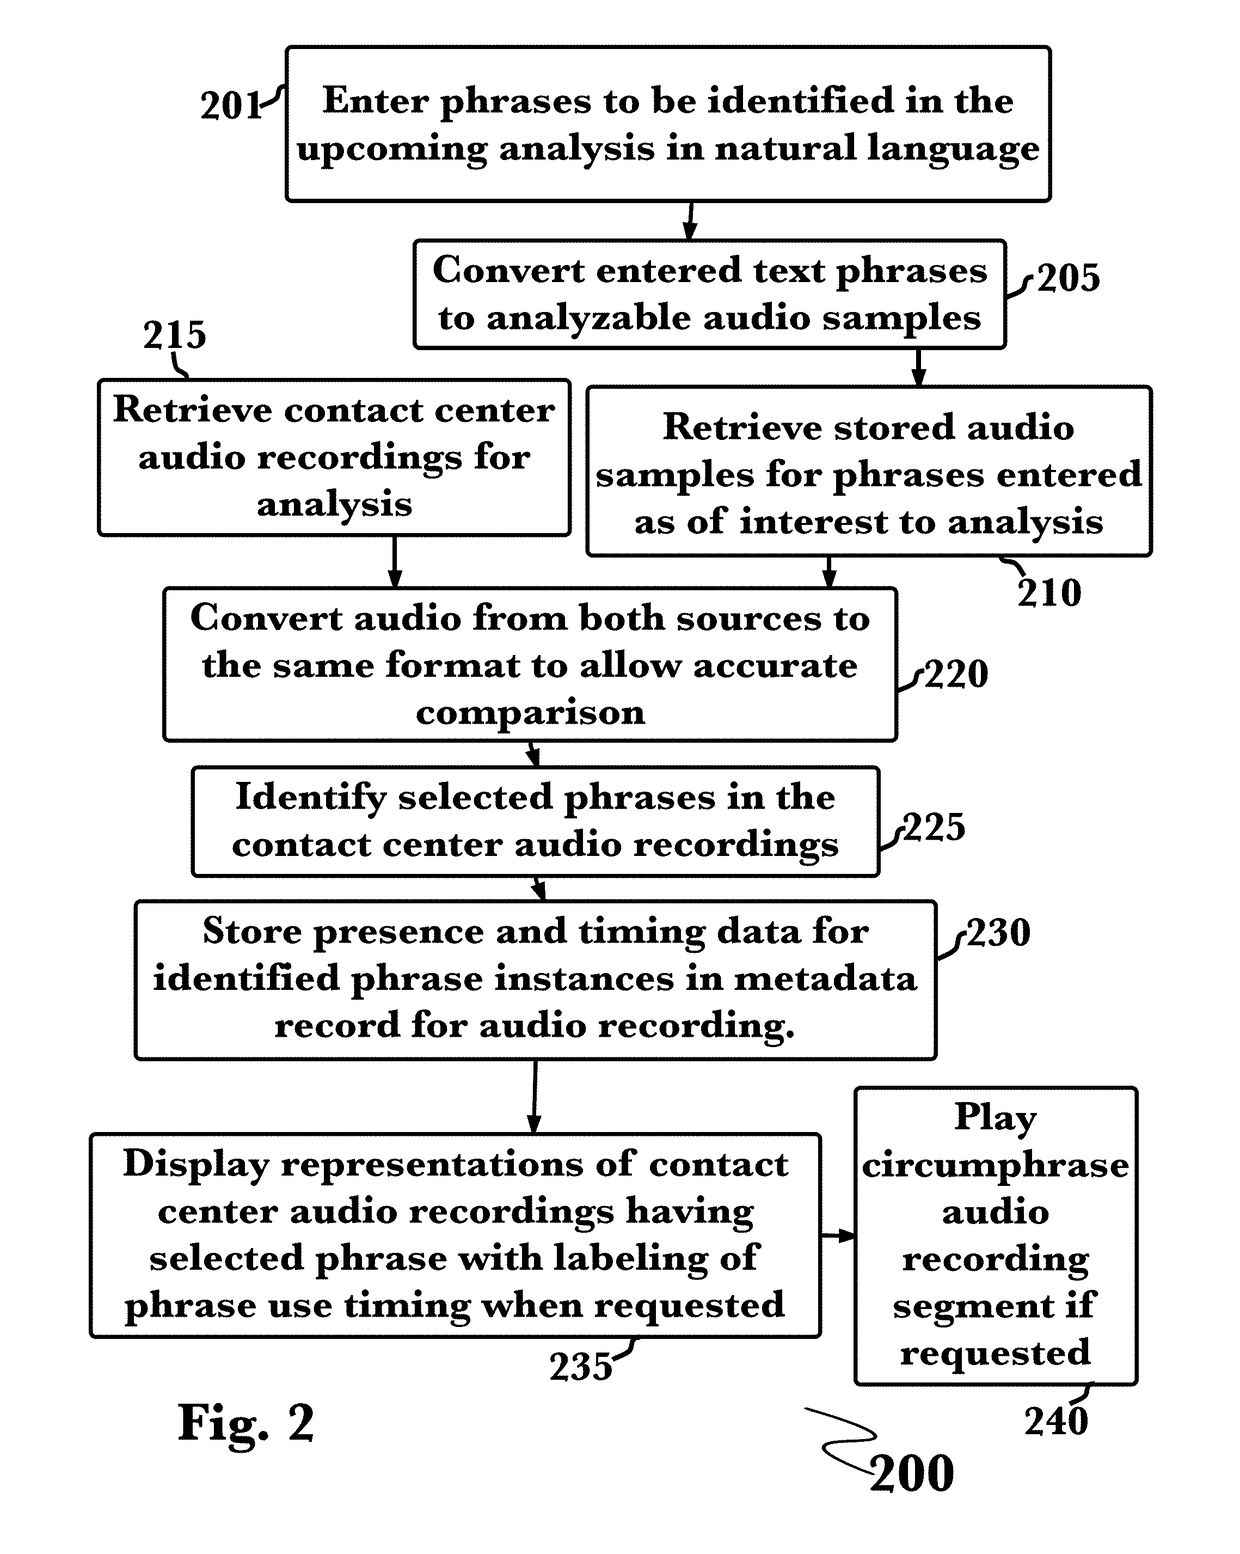 Phrase labeling within spoken audio recordings